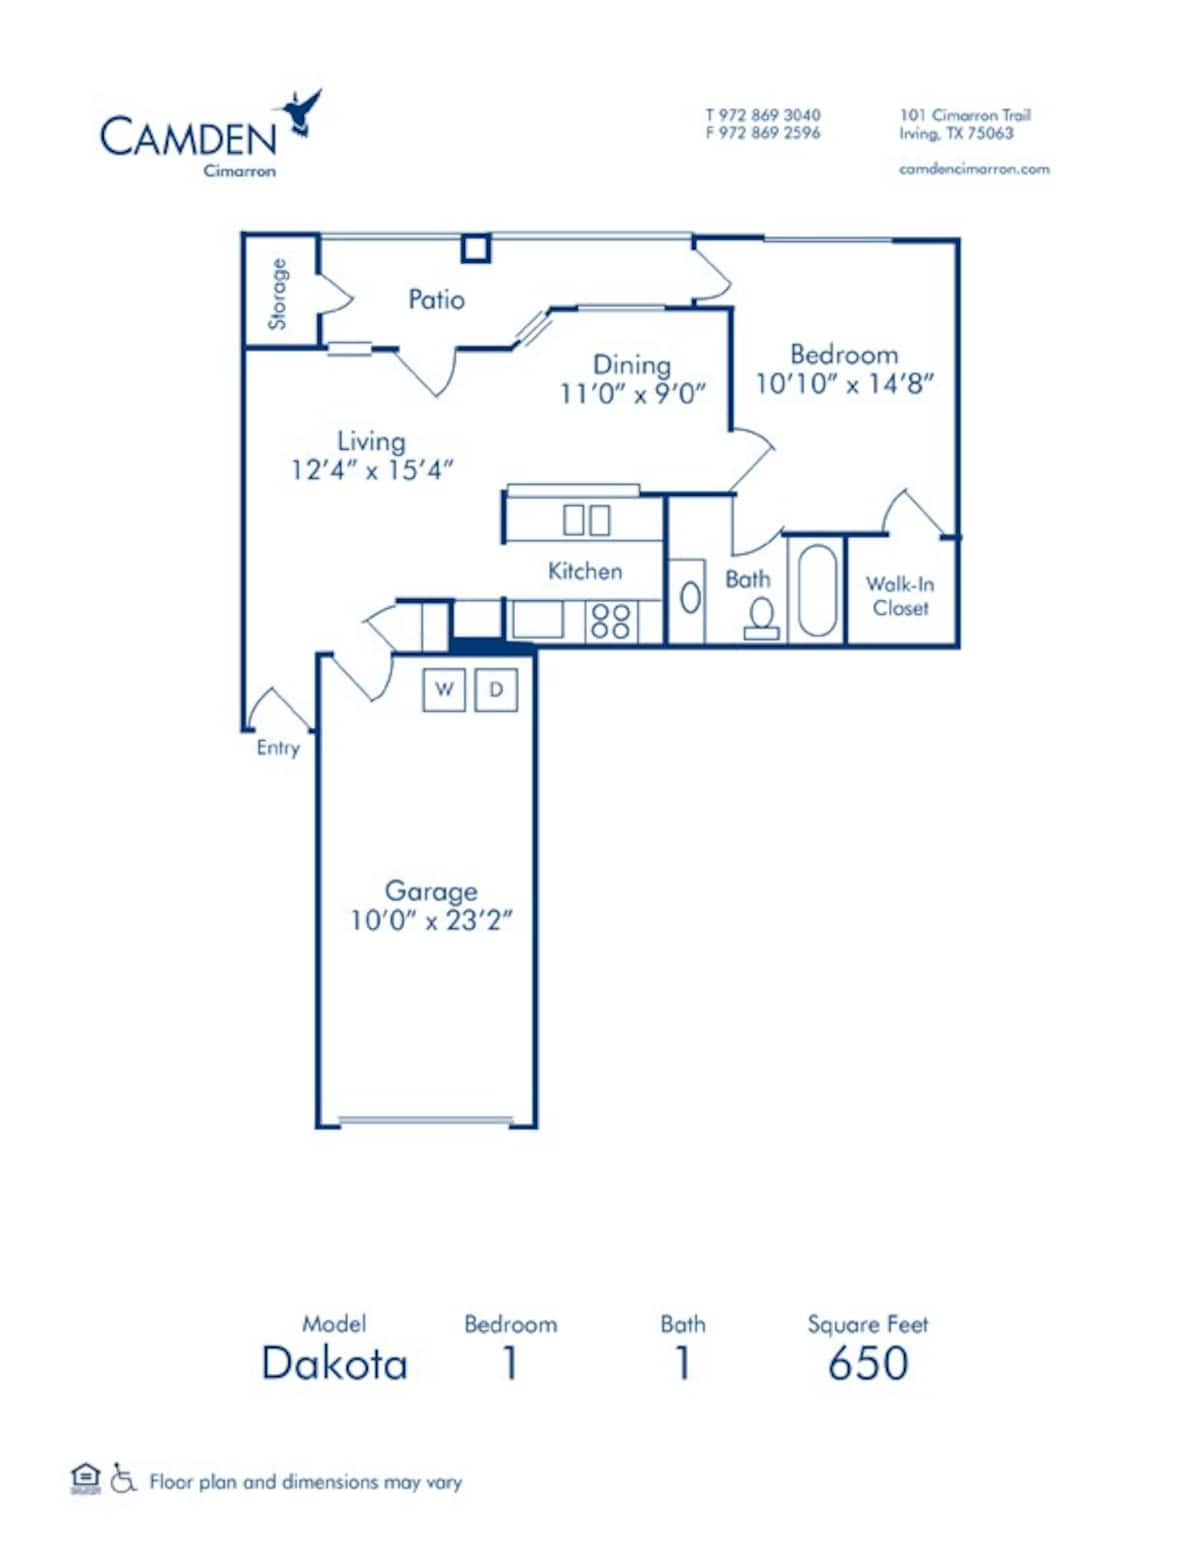 Floorplan diagram for Dakota, showing 1 bedroom